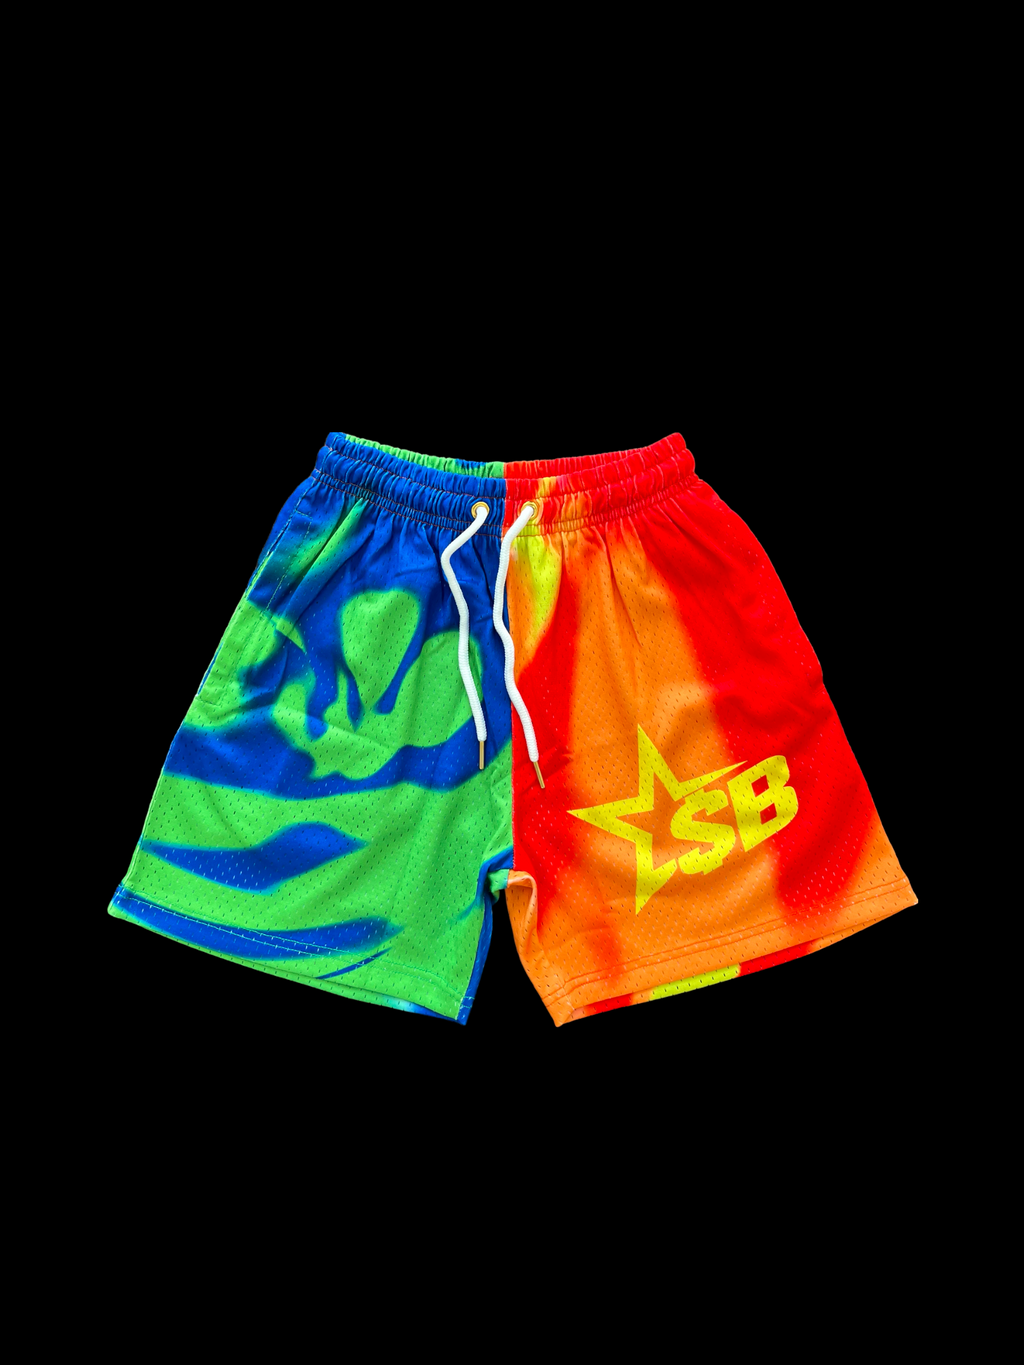 $B Mesh Shorts